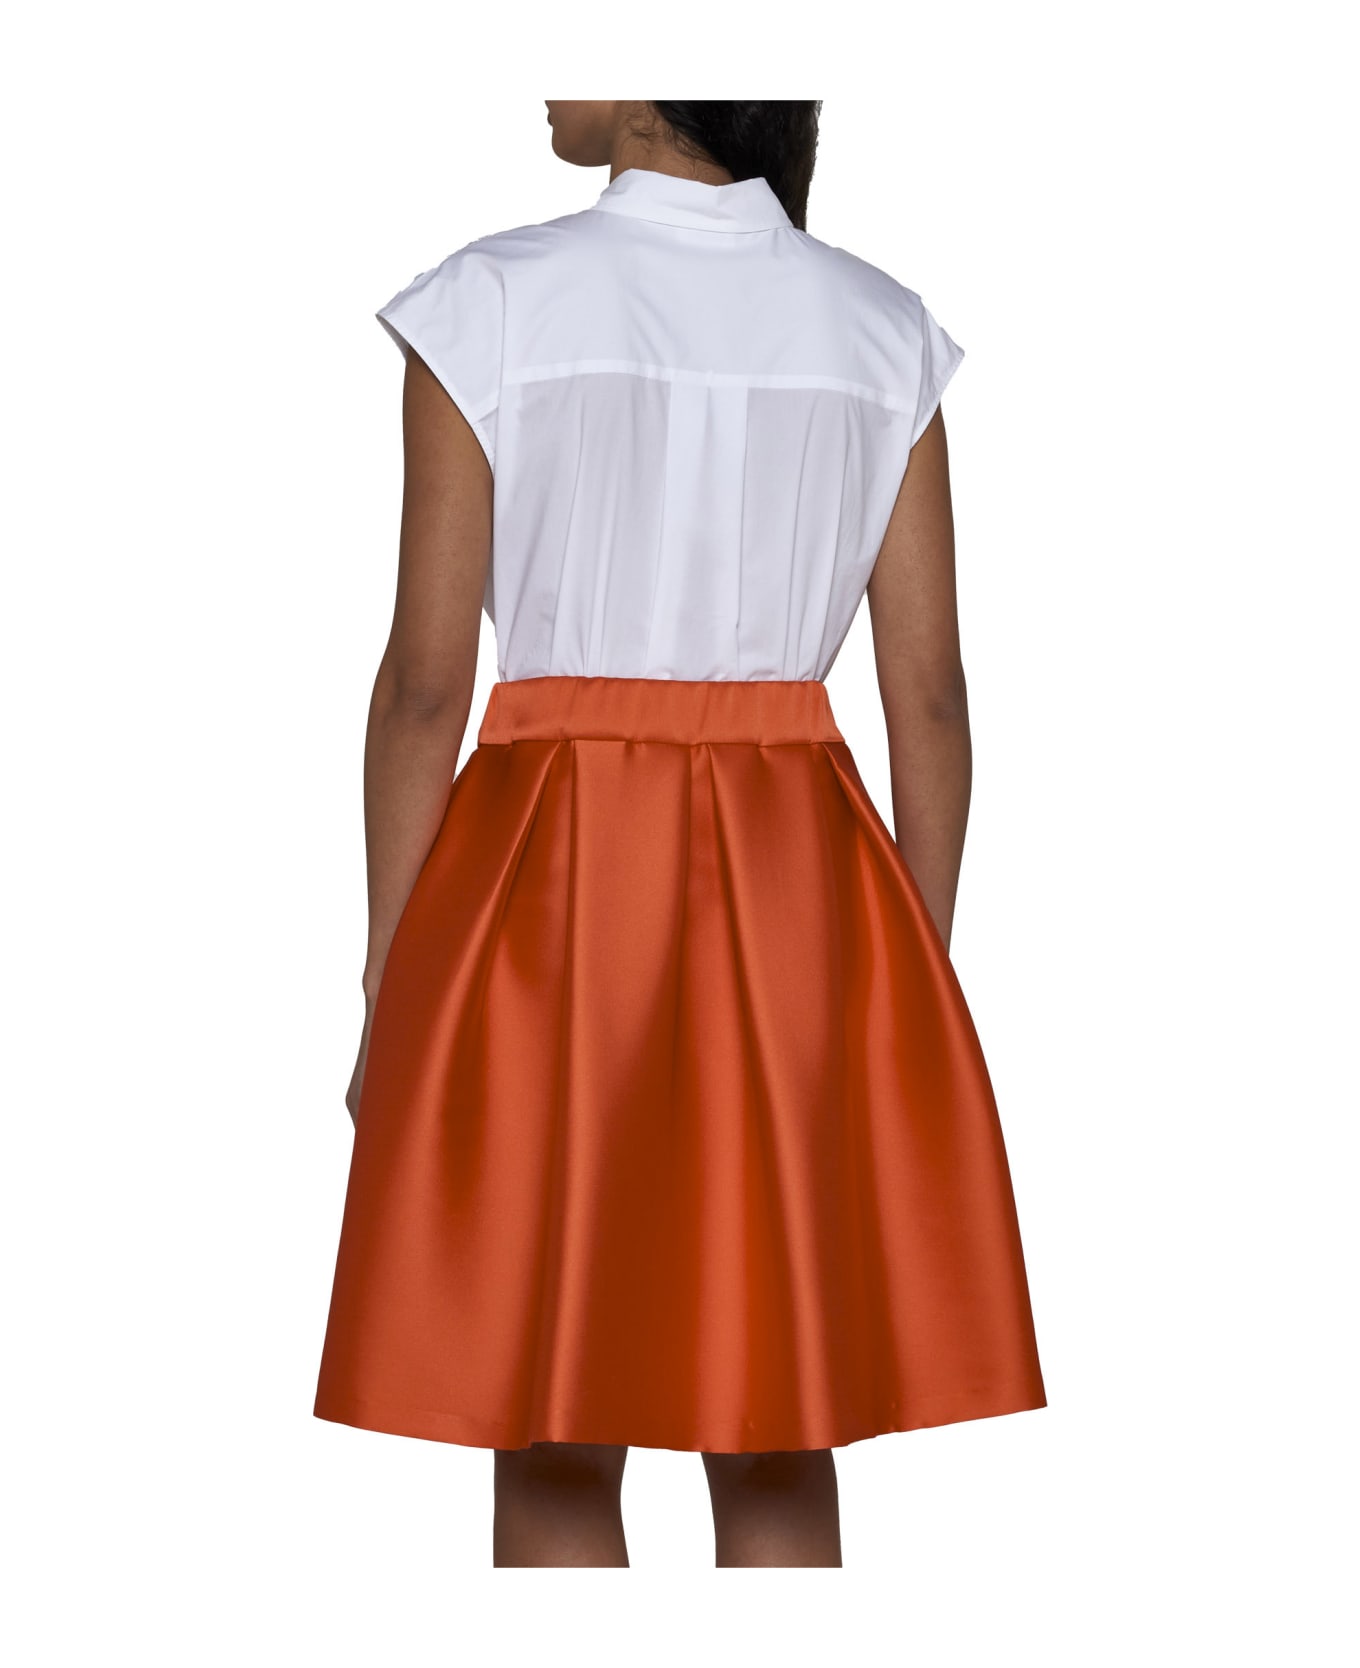 Parosh Skirt - Orange スカート